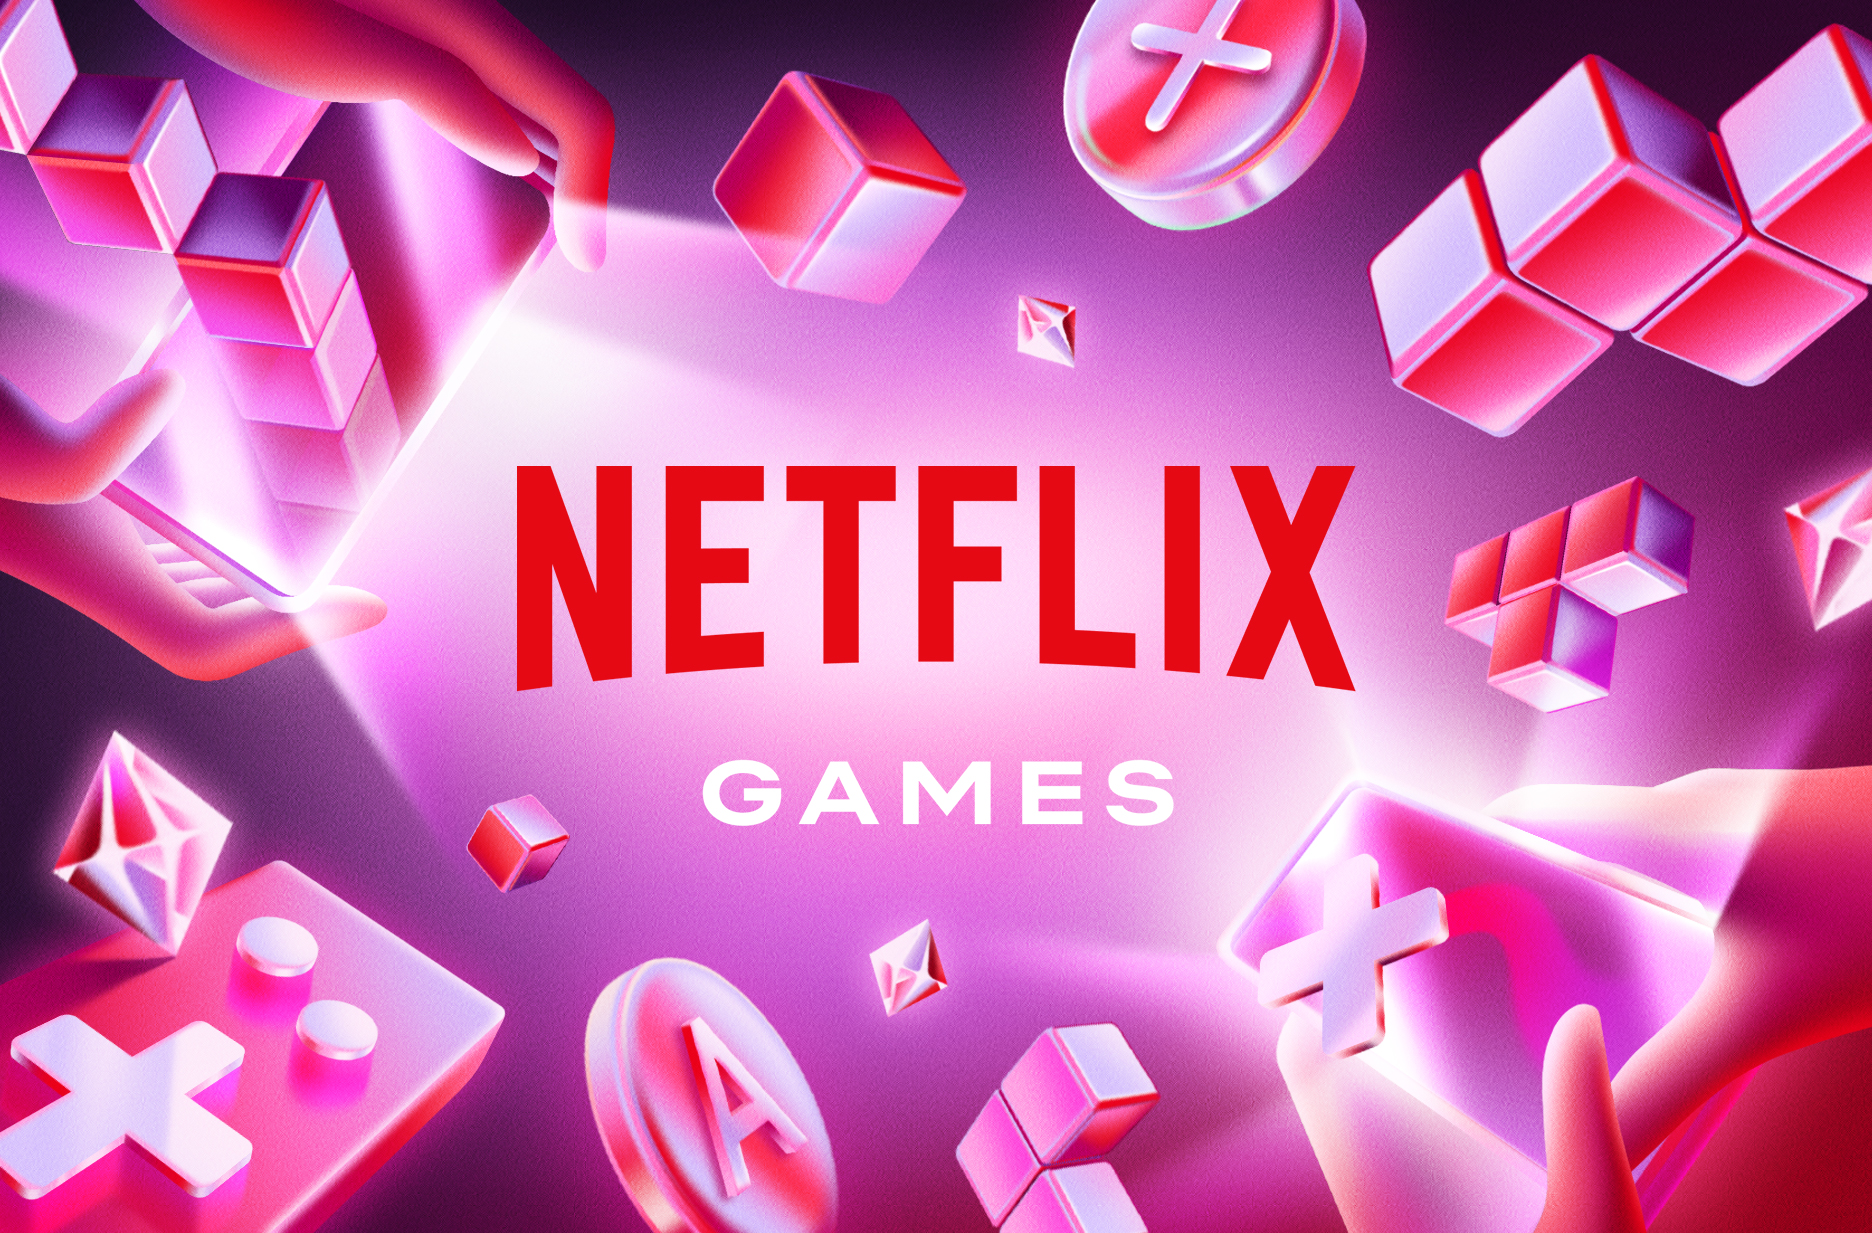 Netflix acquires first video game studio - Digital TV Europe